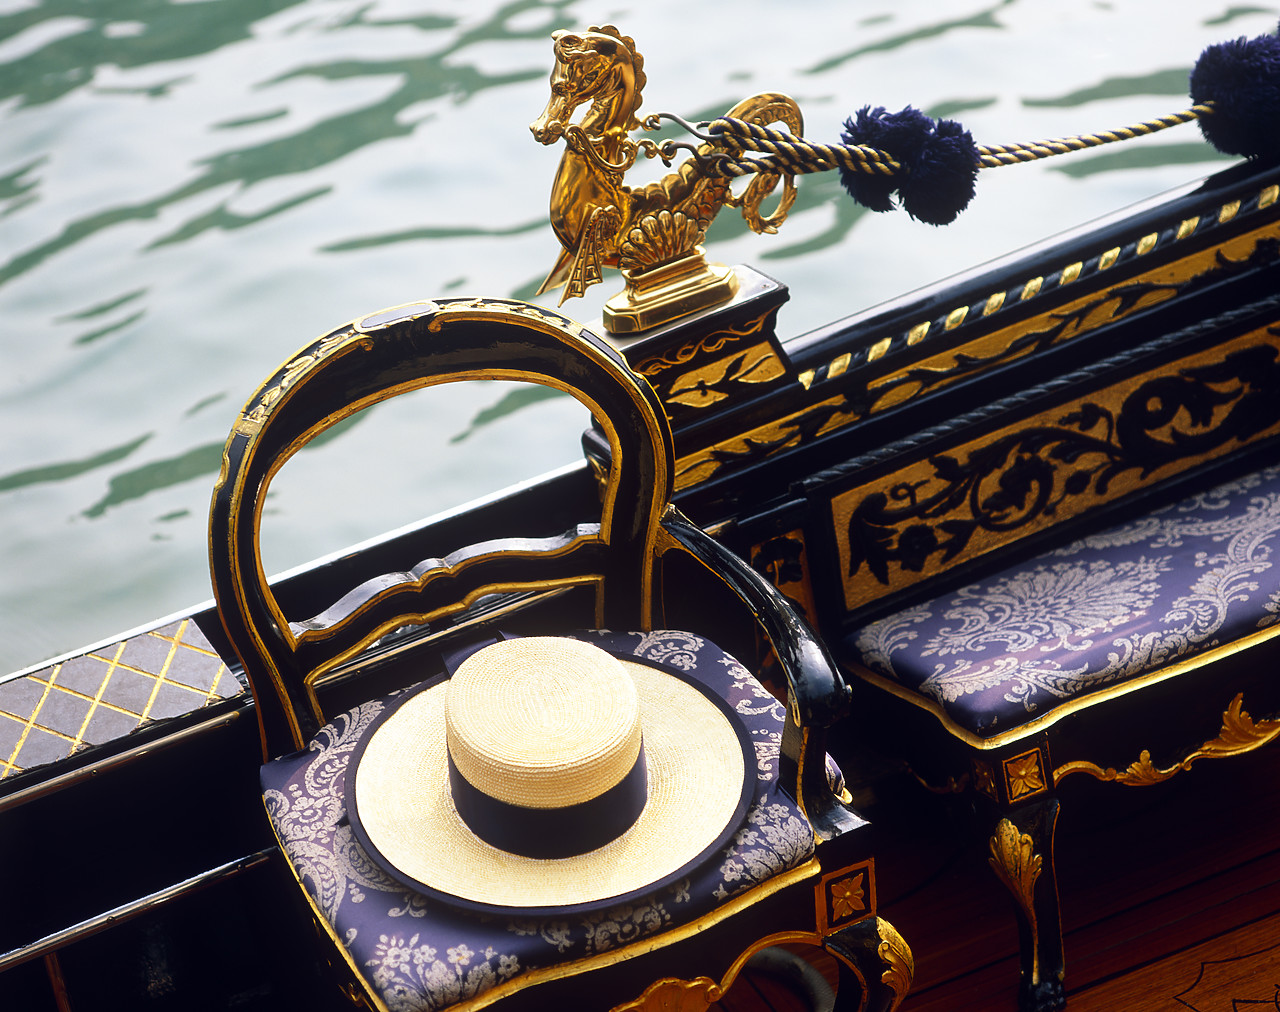 #010147-1 - Gondolier's Hat in Gondola, Venice, Italy